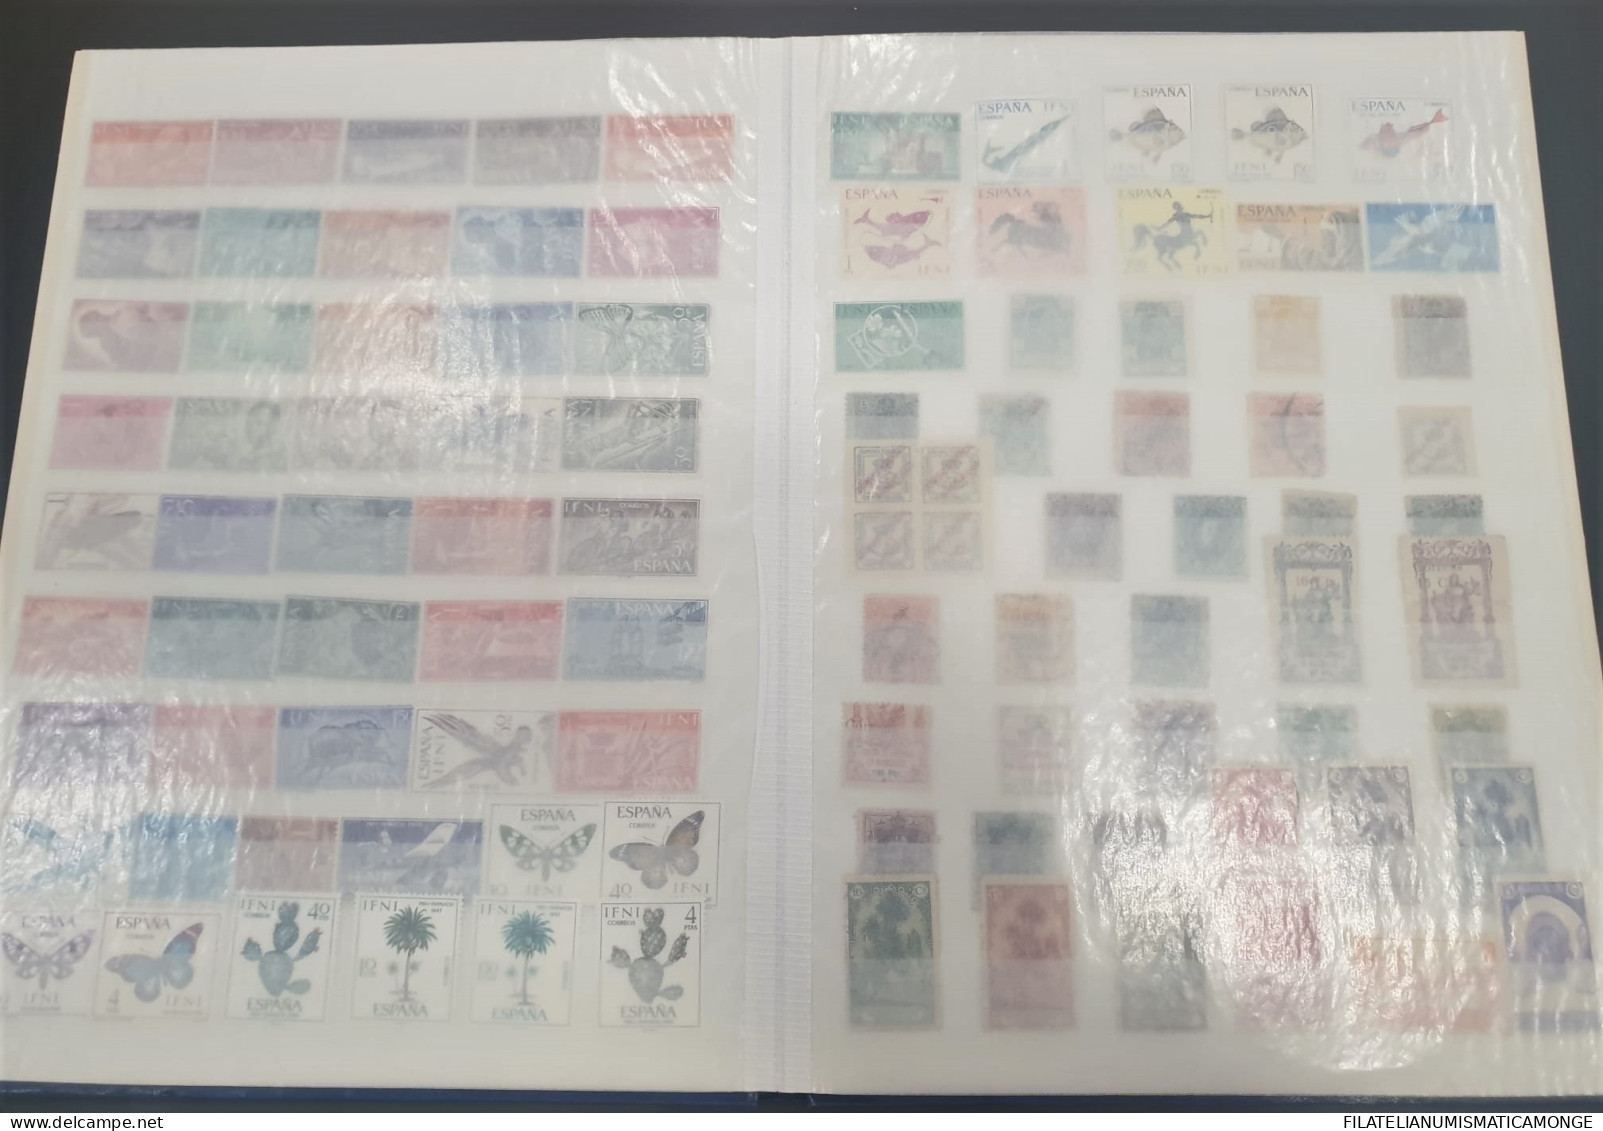  Offer - Lot Stamps - Paqueteria  Colonias Españolas / Varios 1500 sellos difer